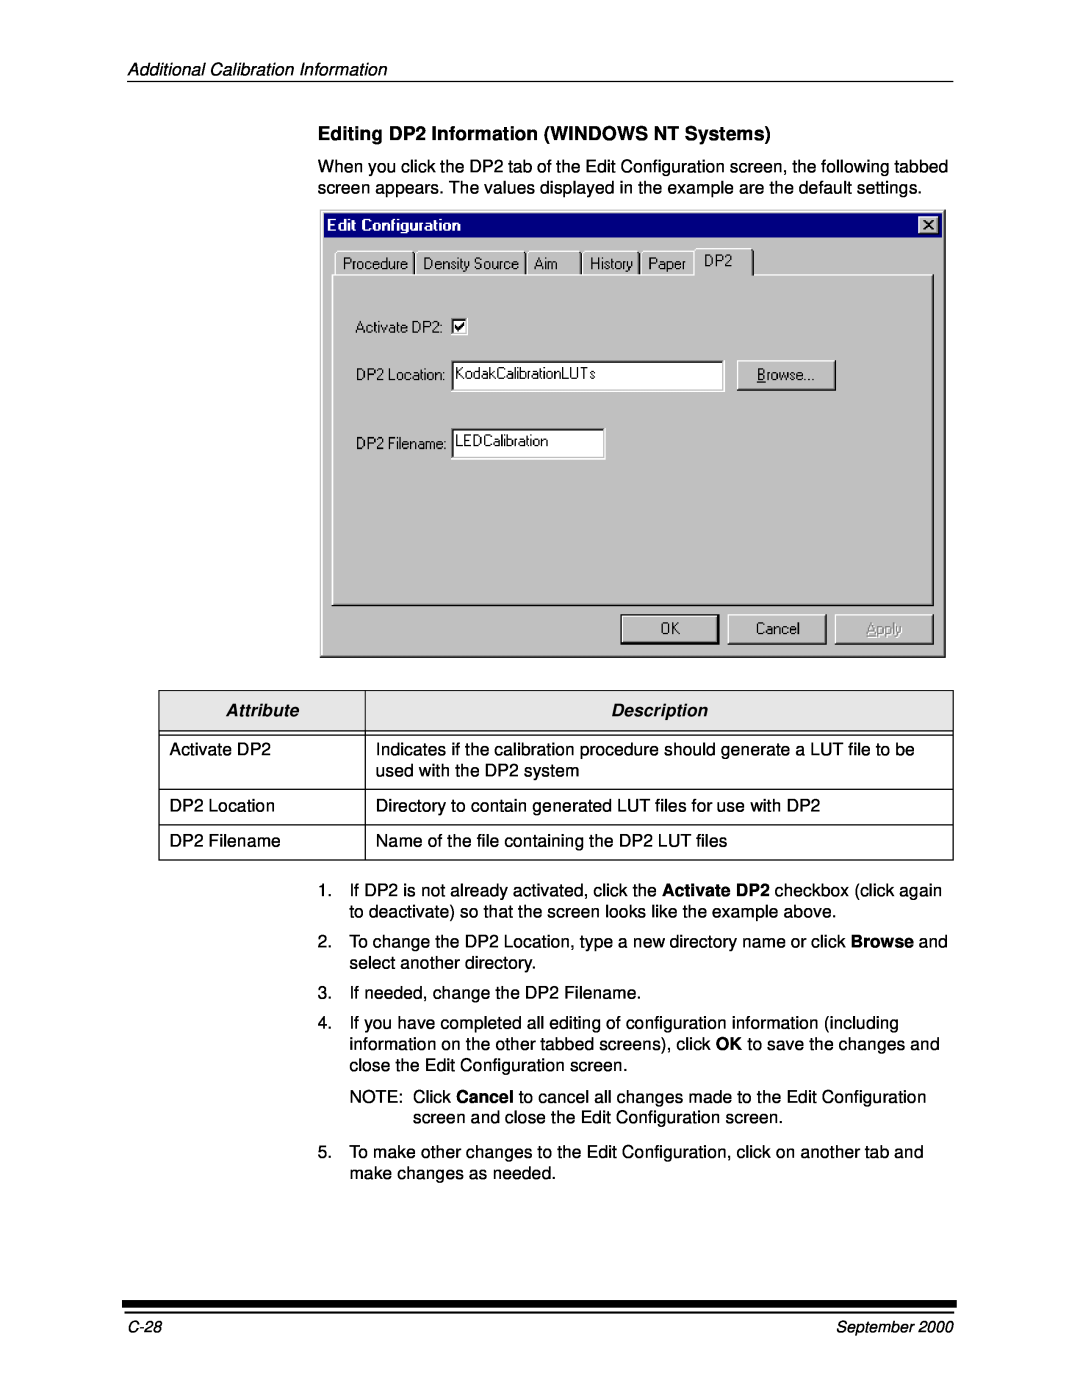 Kodak 20R manual Editing DP2 Information WINDOWS NT Systems, Additional Calibration Information 